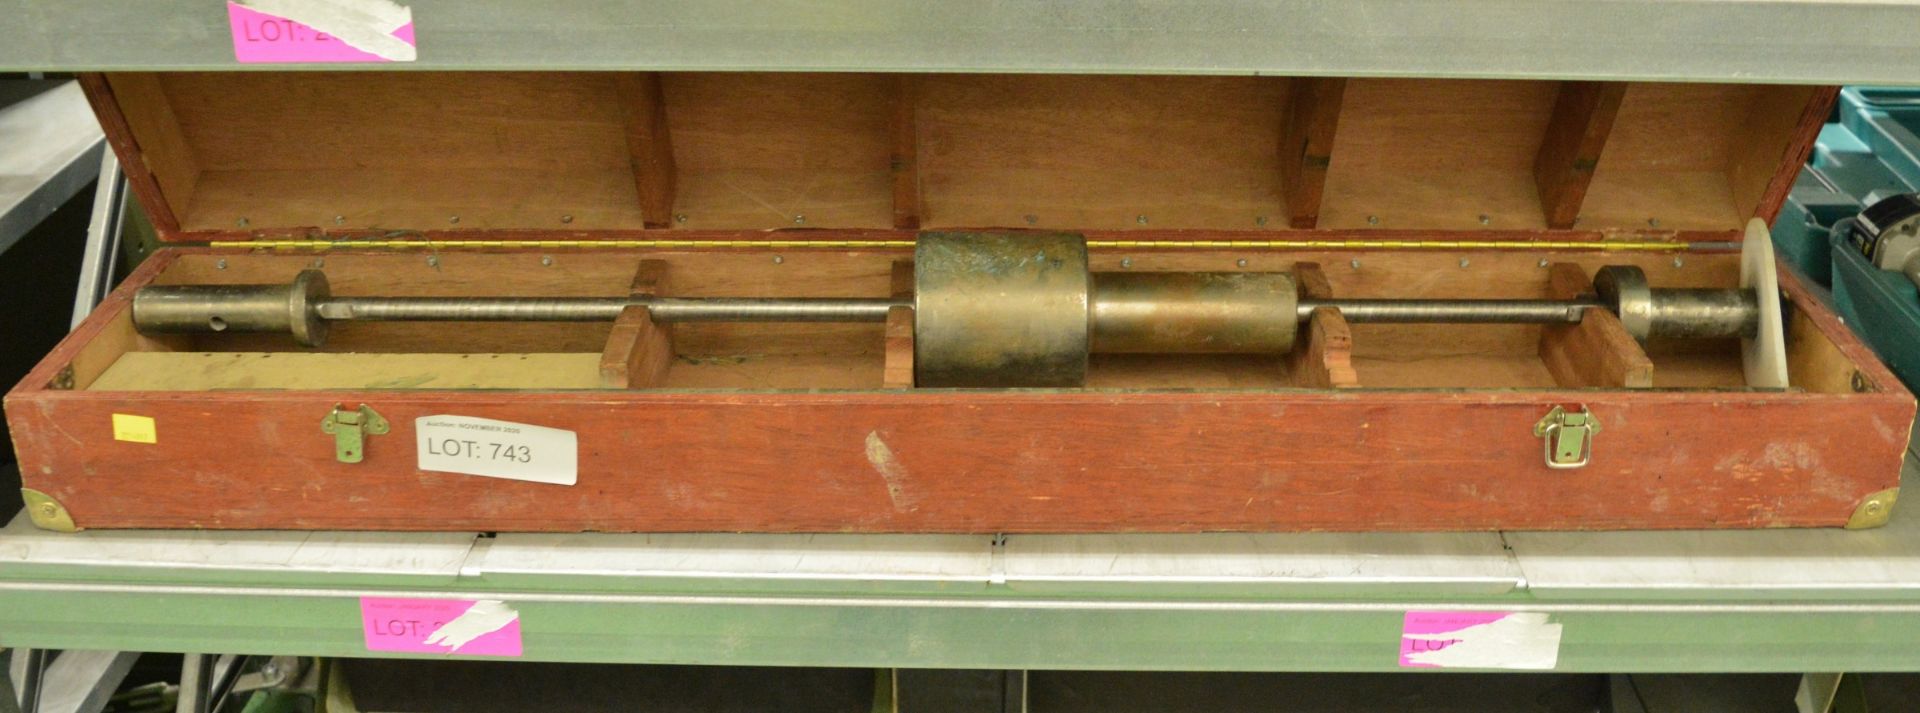 Penetrometer Unit in wooden case